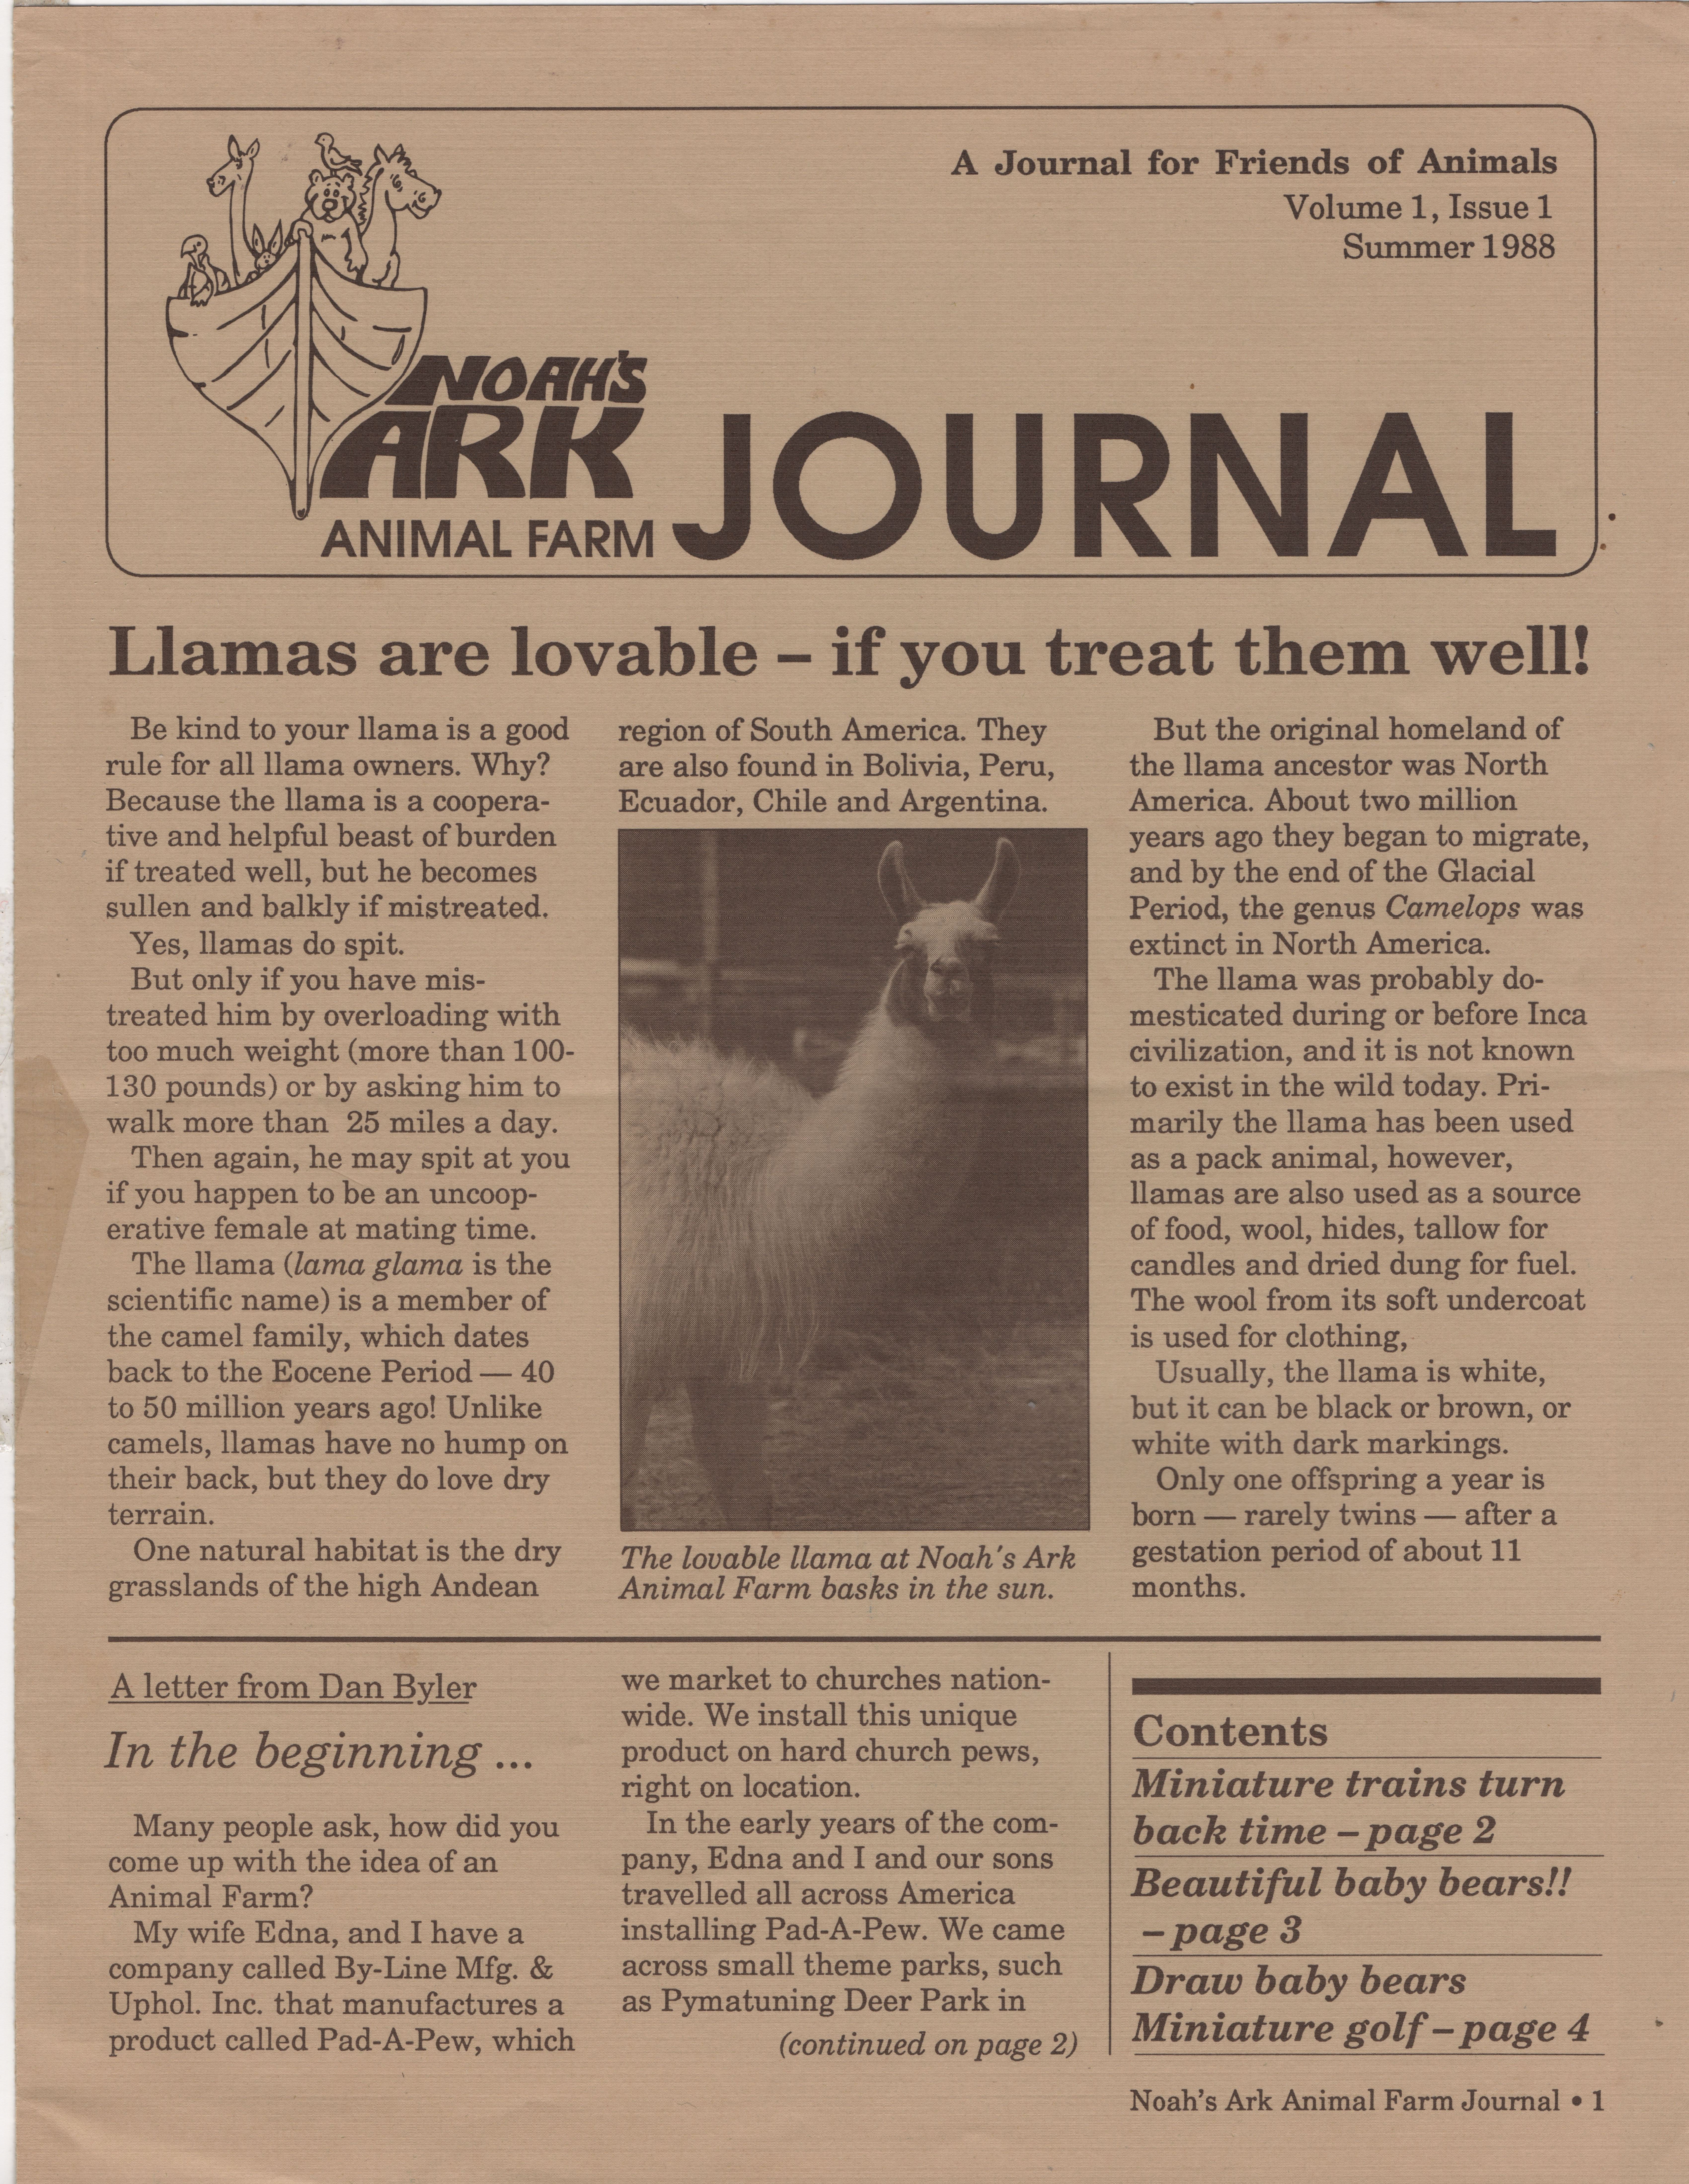 Noah's ark animal farm journal photo